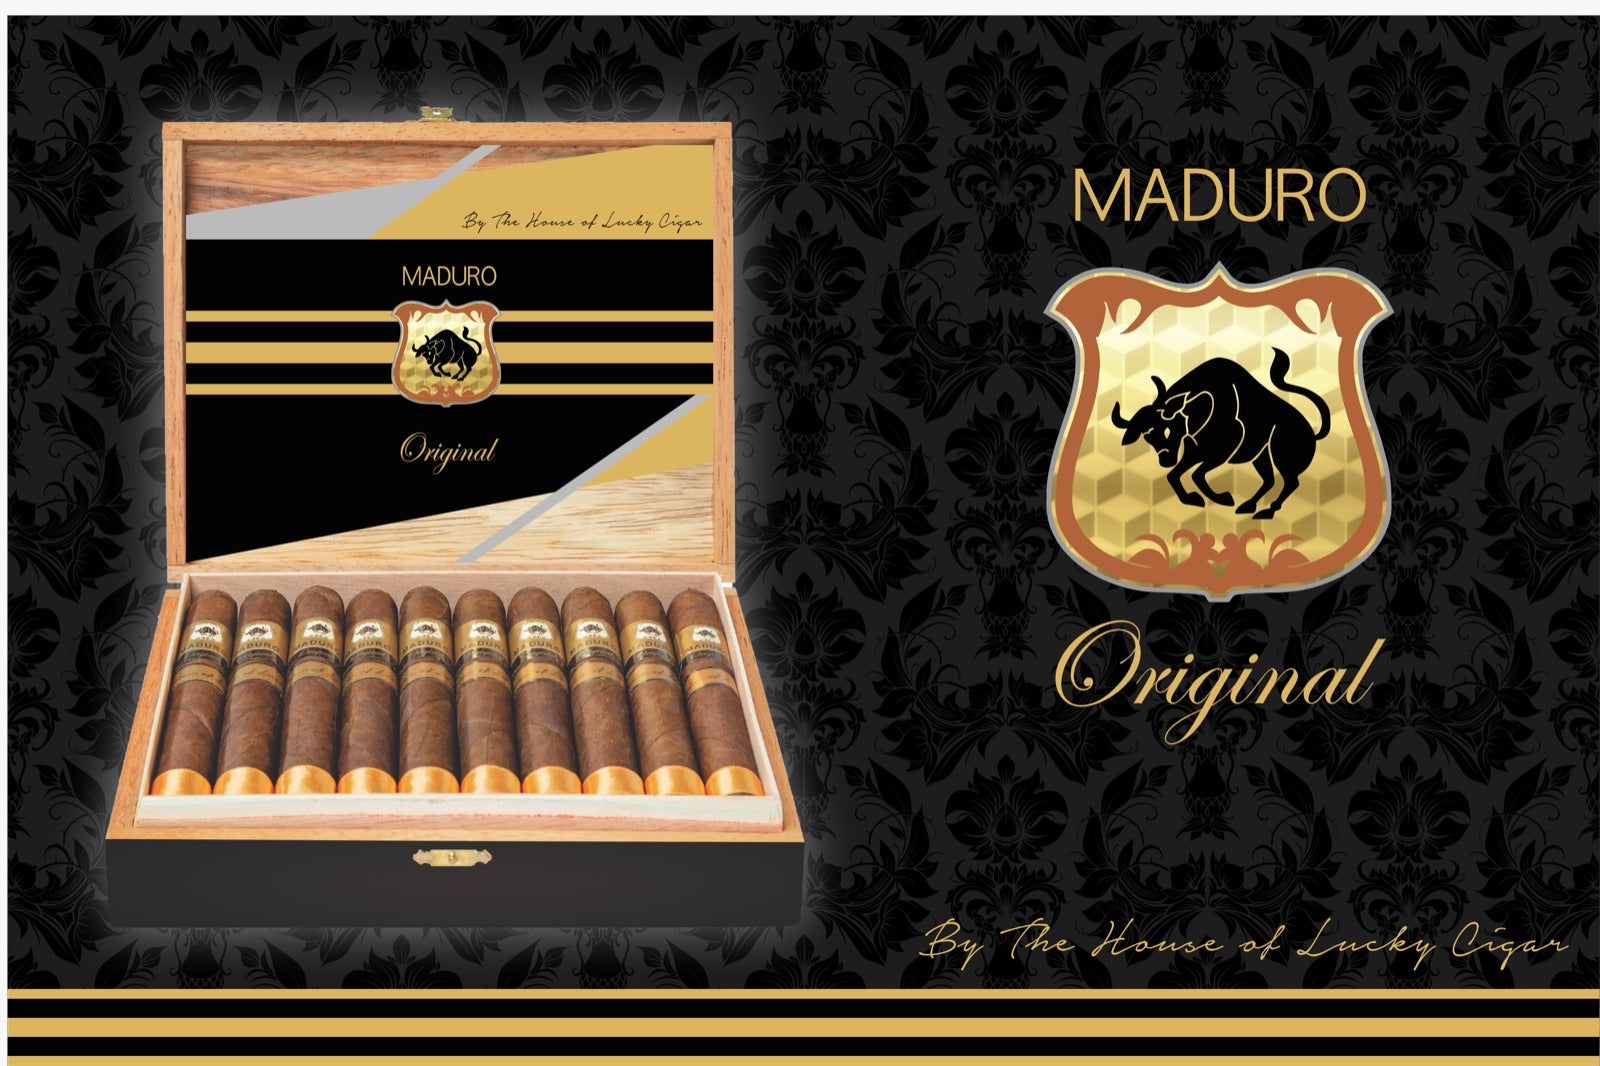 Maduro Cigars: Maduro Original Robusto 5x50 Box of 20